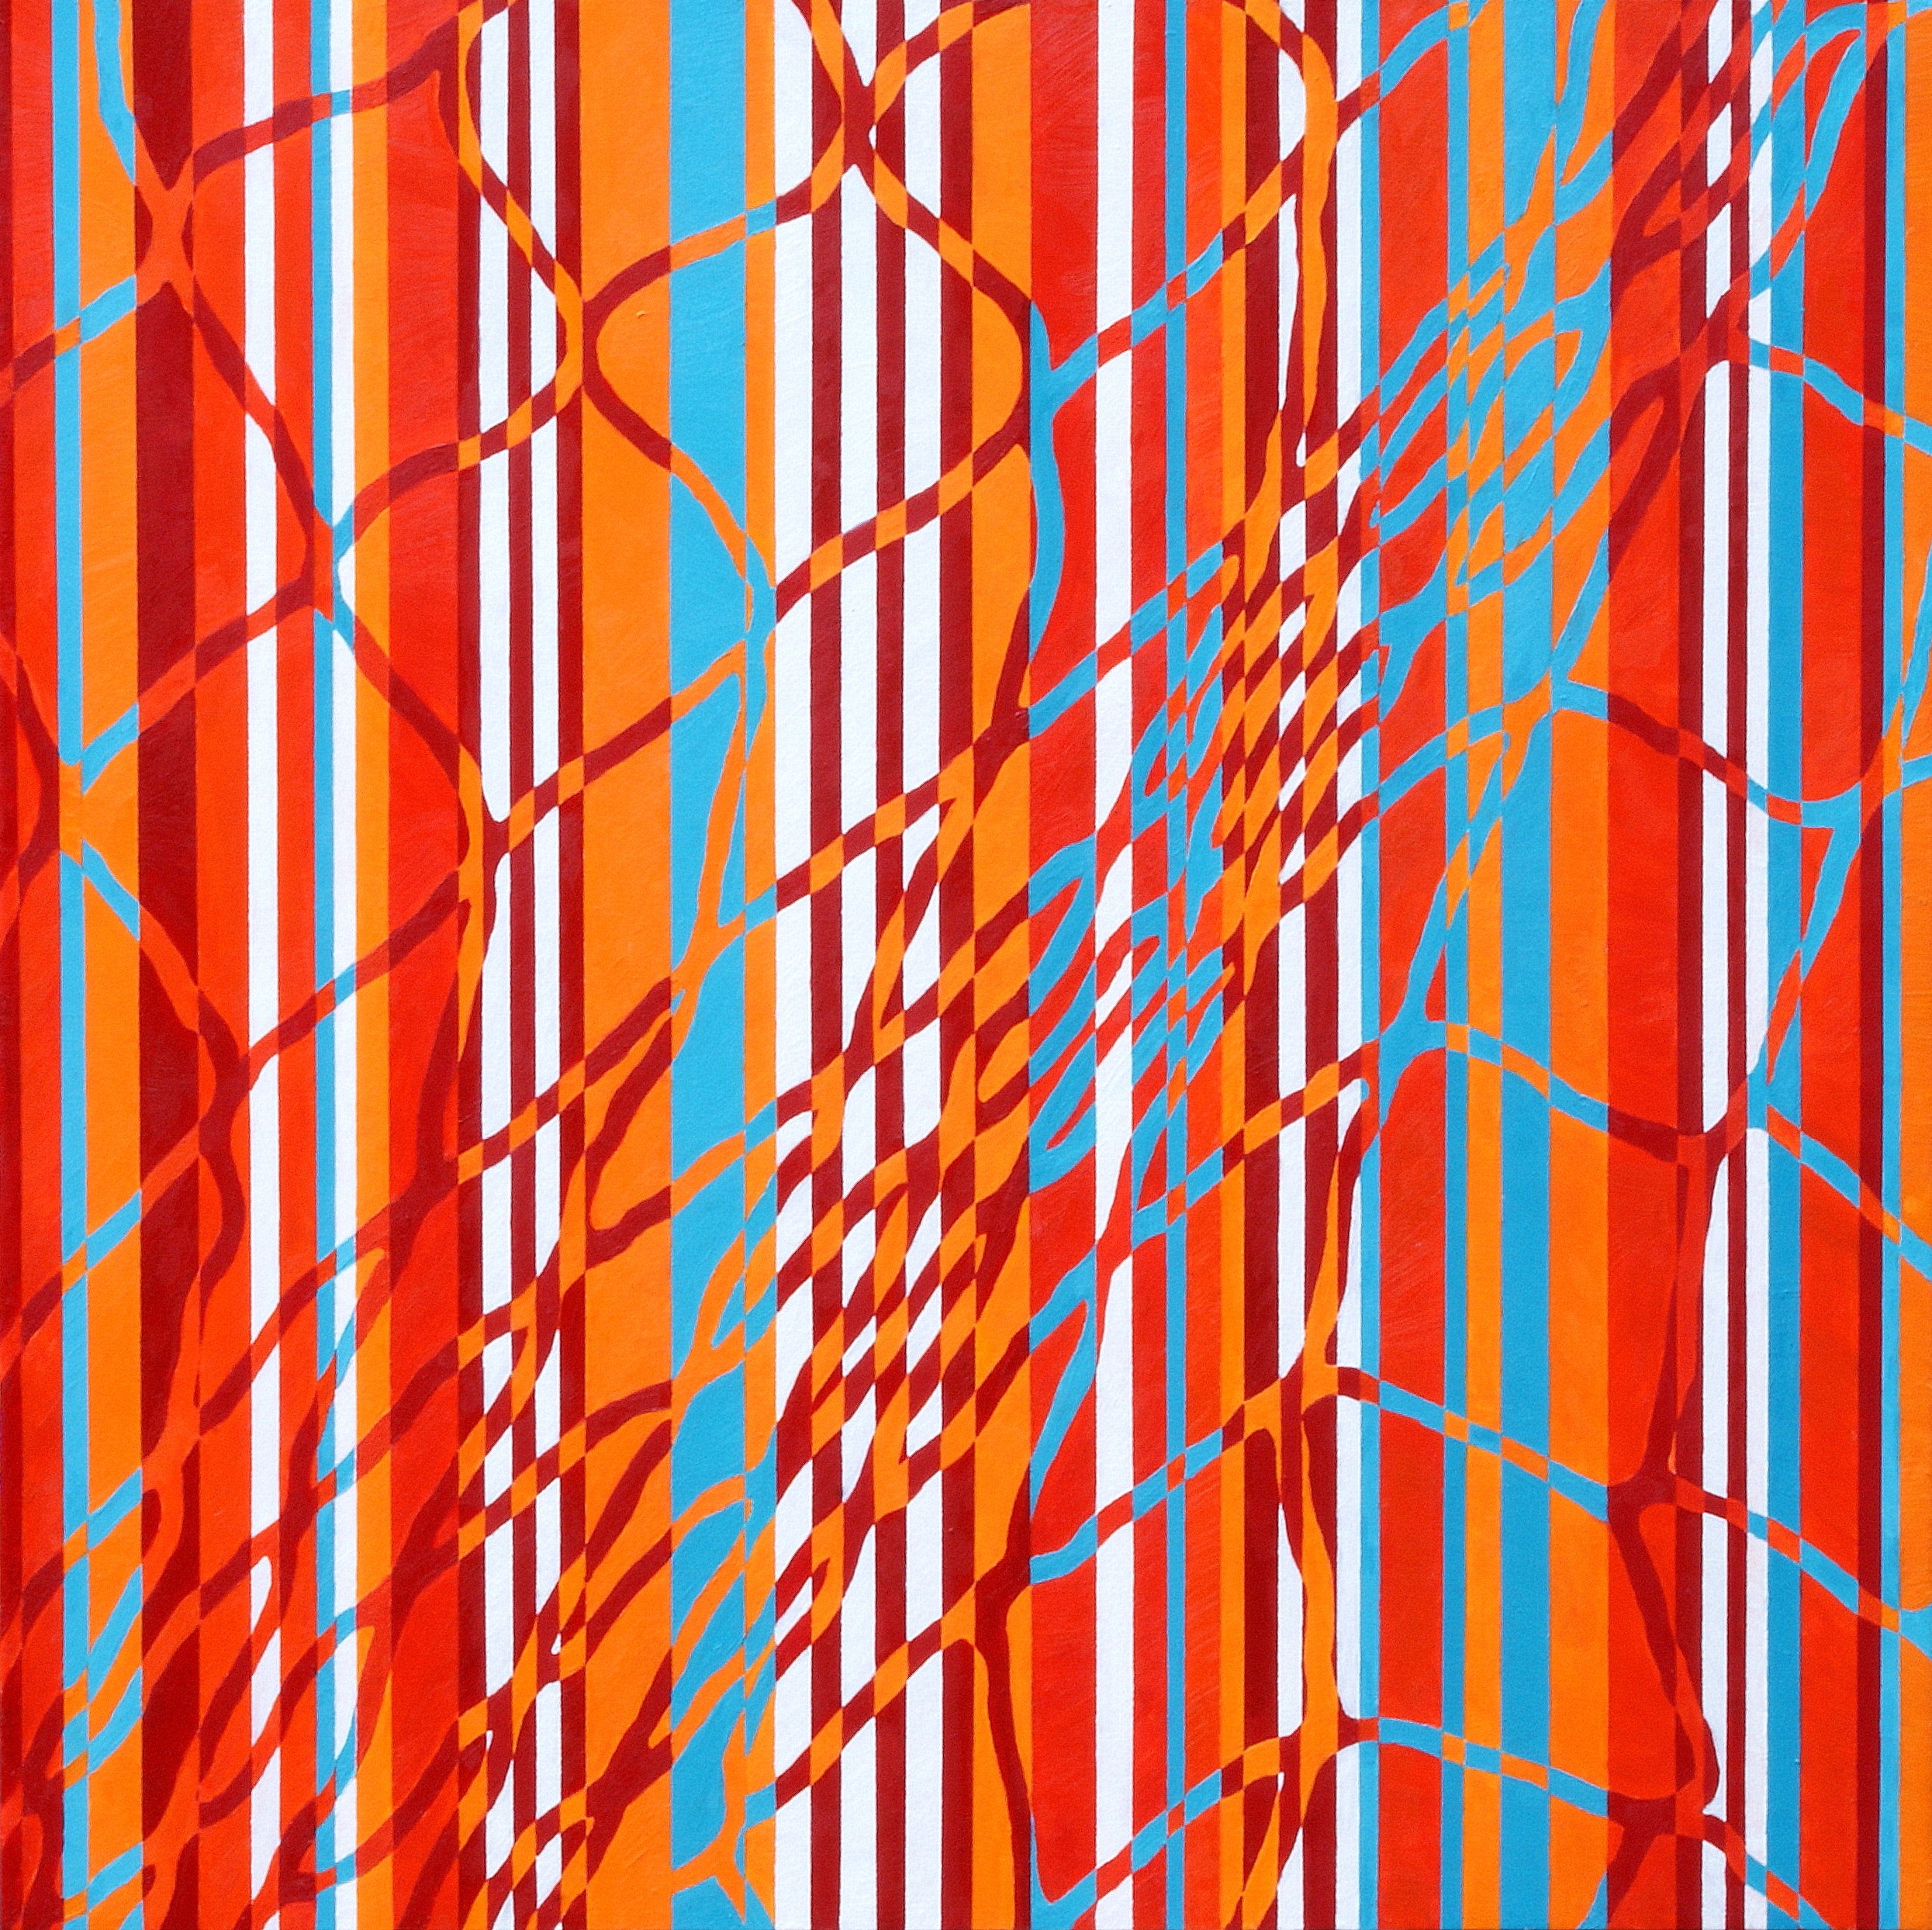 Oscillating Net (2021, oil on canvas, 60 cm x 60 cm)